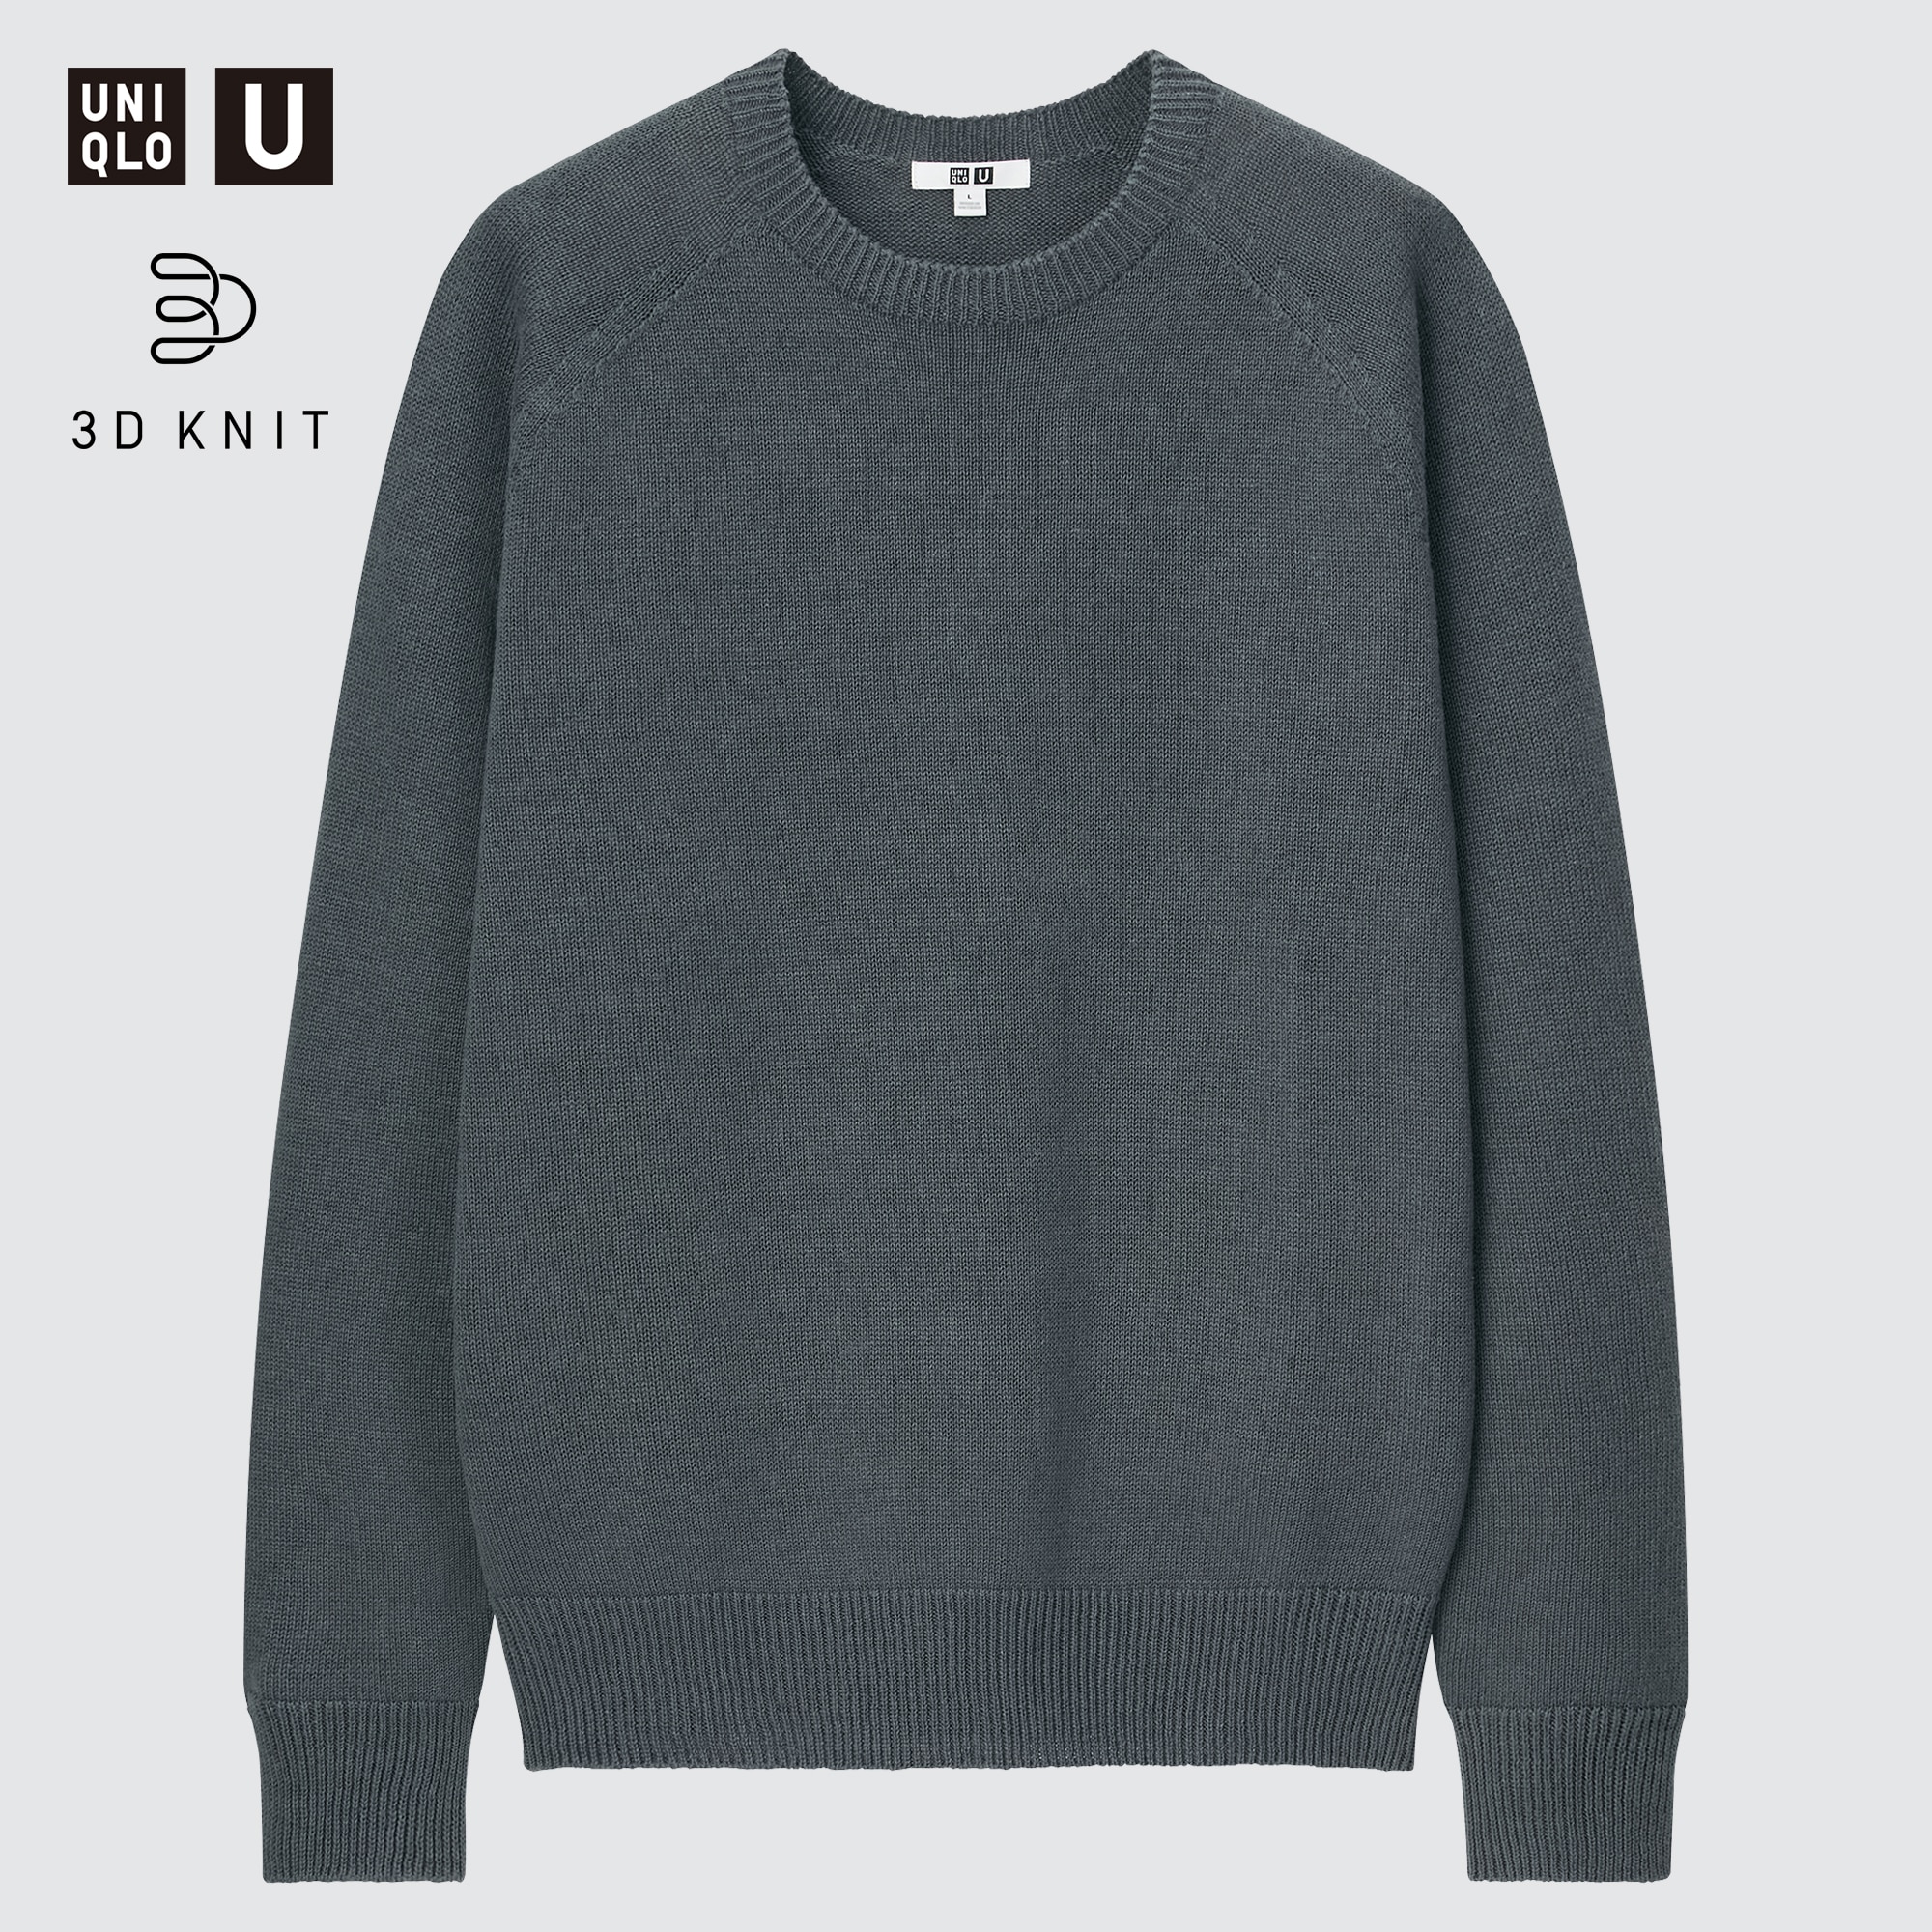 UNIQLOUNIQLO Masterpiece3D Knit Cotton VolumeSleeve Sweater